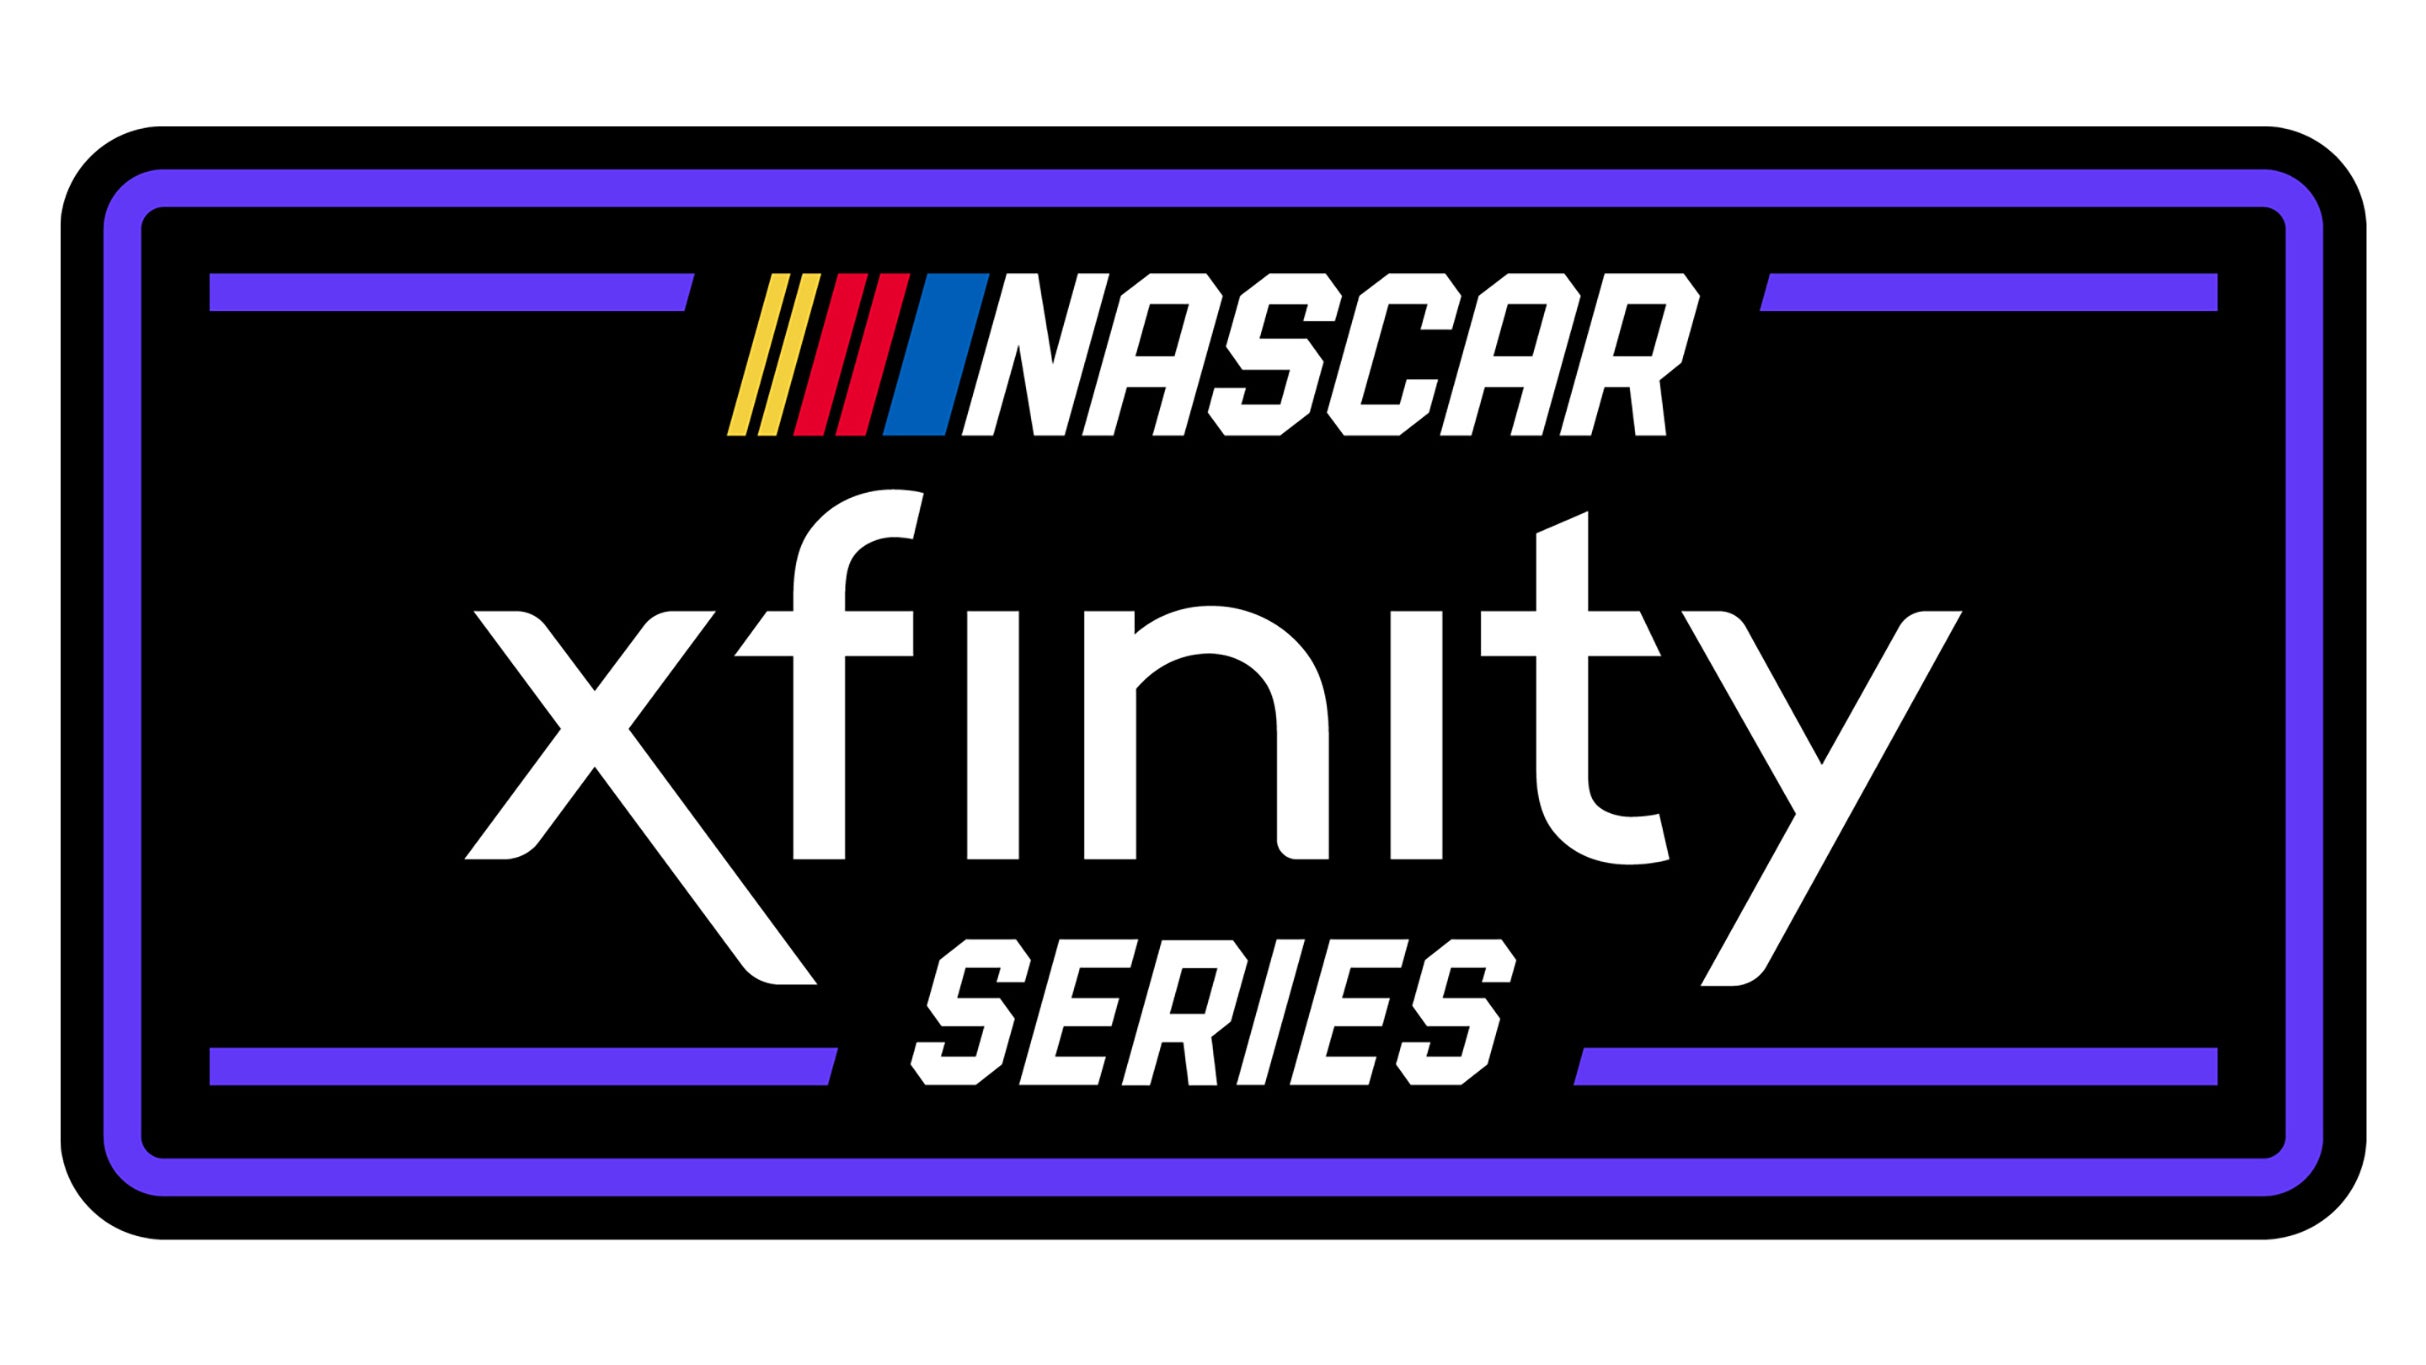 NASCAR Xfinity Series Race at Talladega Superspeedway